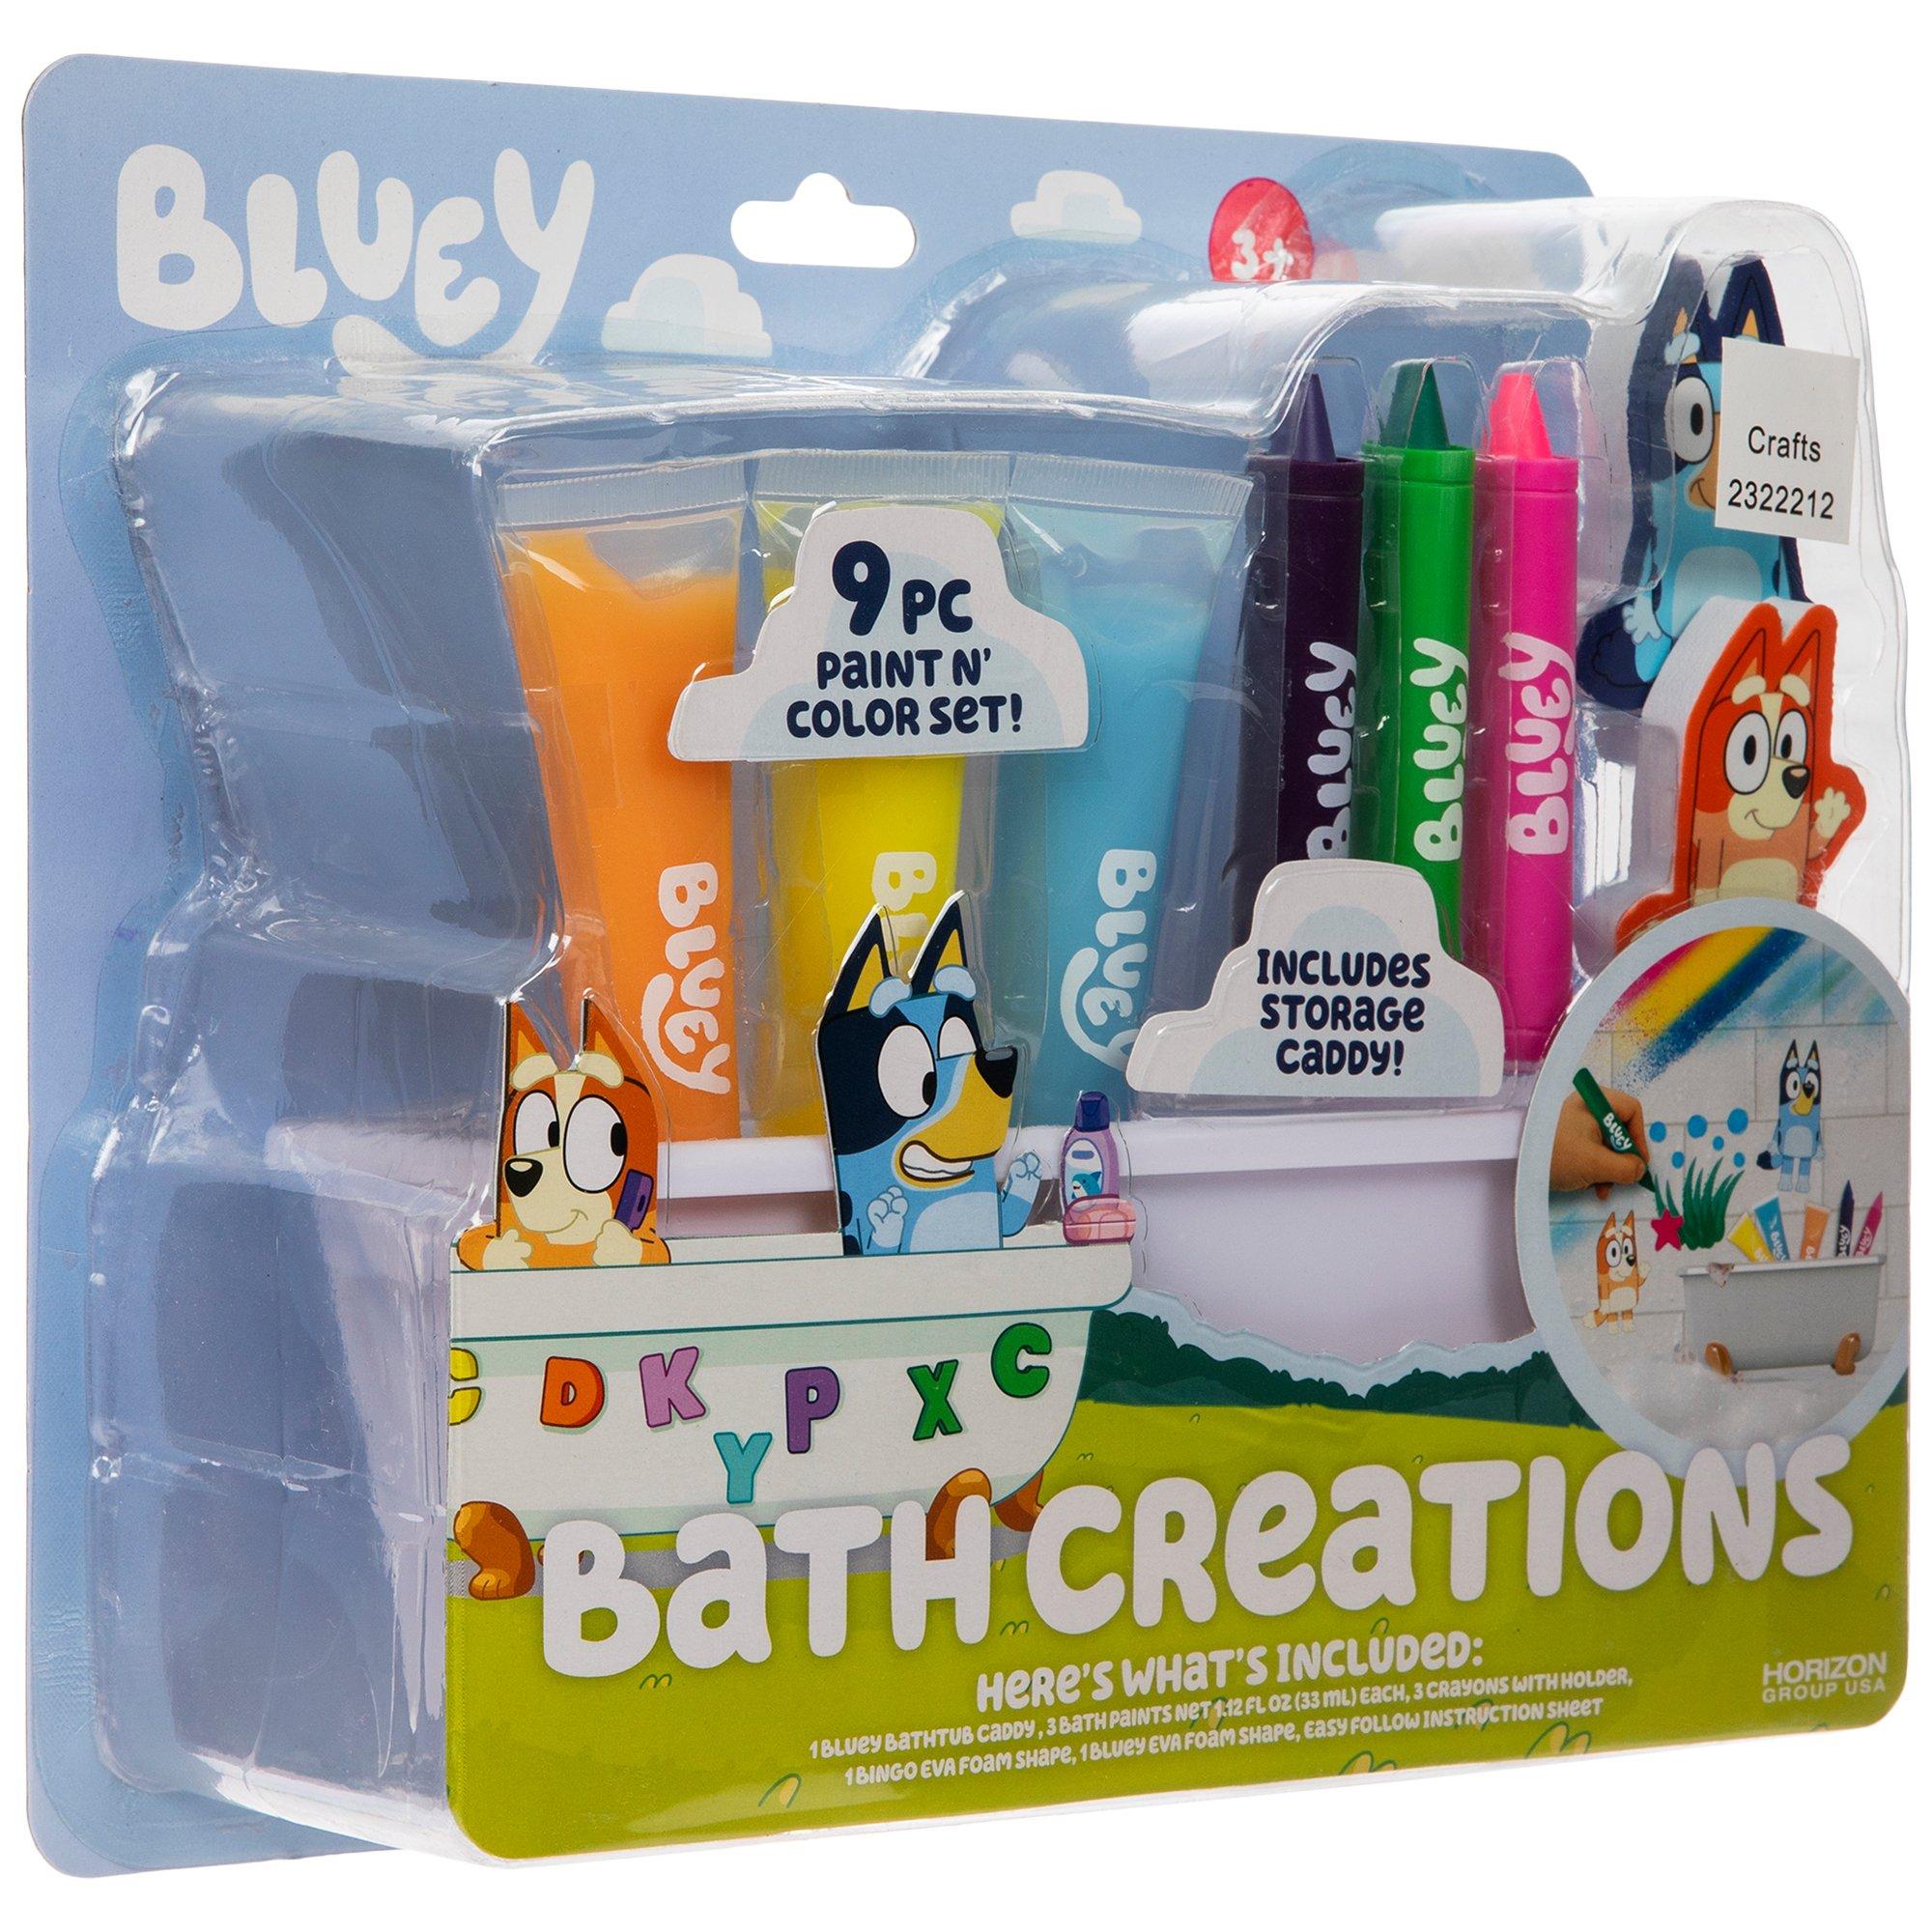 Bluey Bath Creations, 9-Piece Activity Set, Fun Bath Toys, Includes  Washable Bath Paints, Bath Crayons, Bath Toy Storage, Bath Paint for  Toddlers 1-3